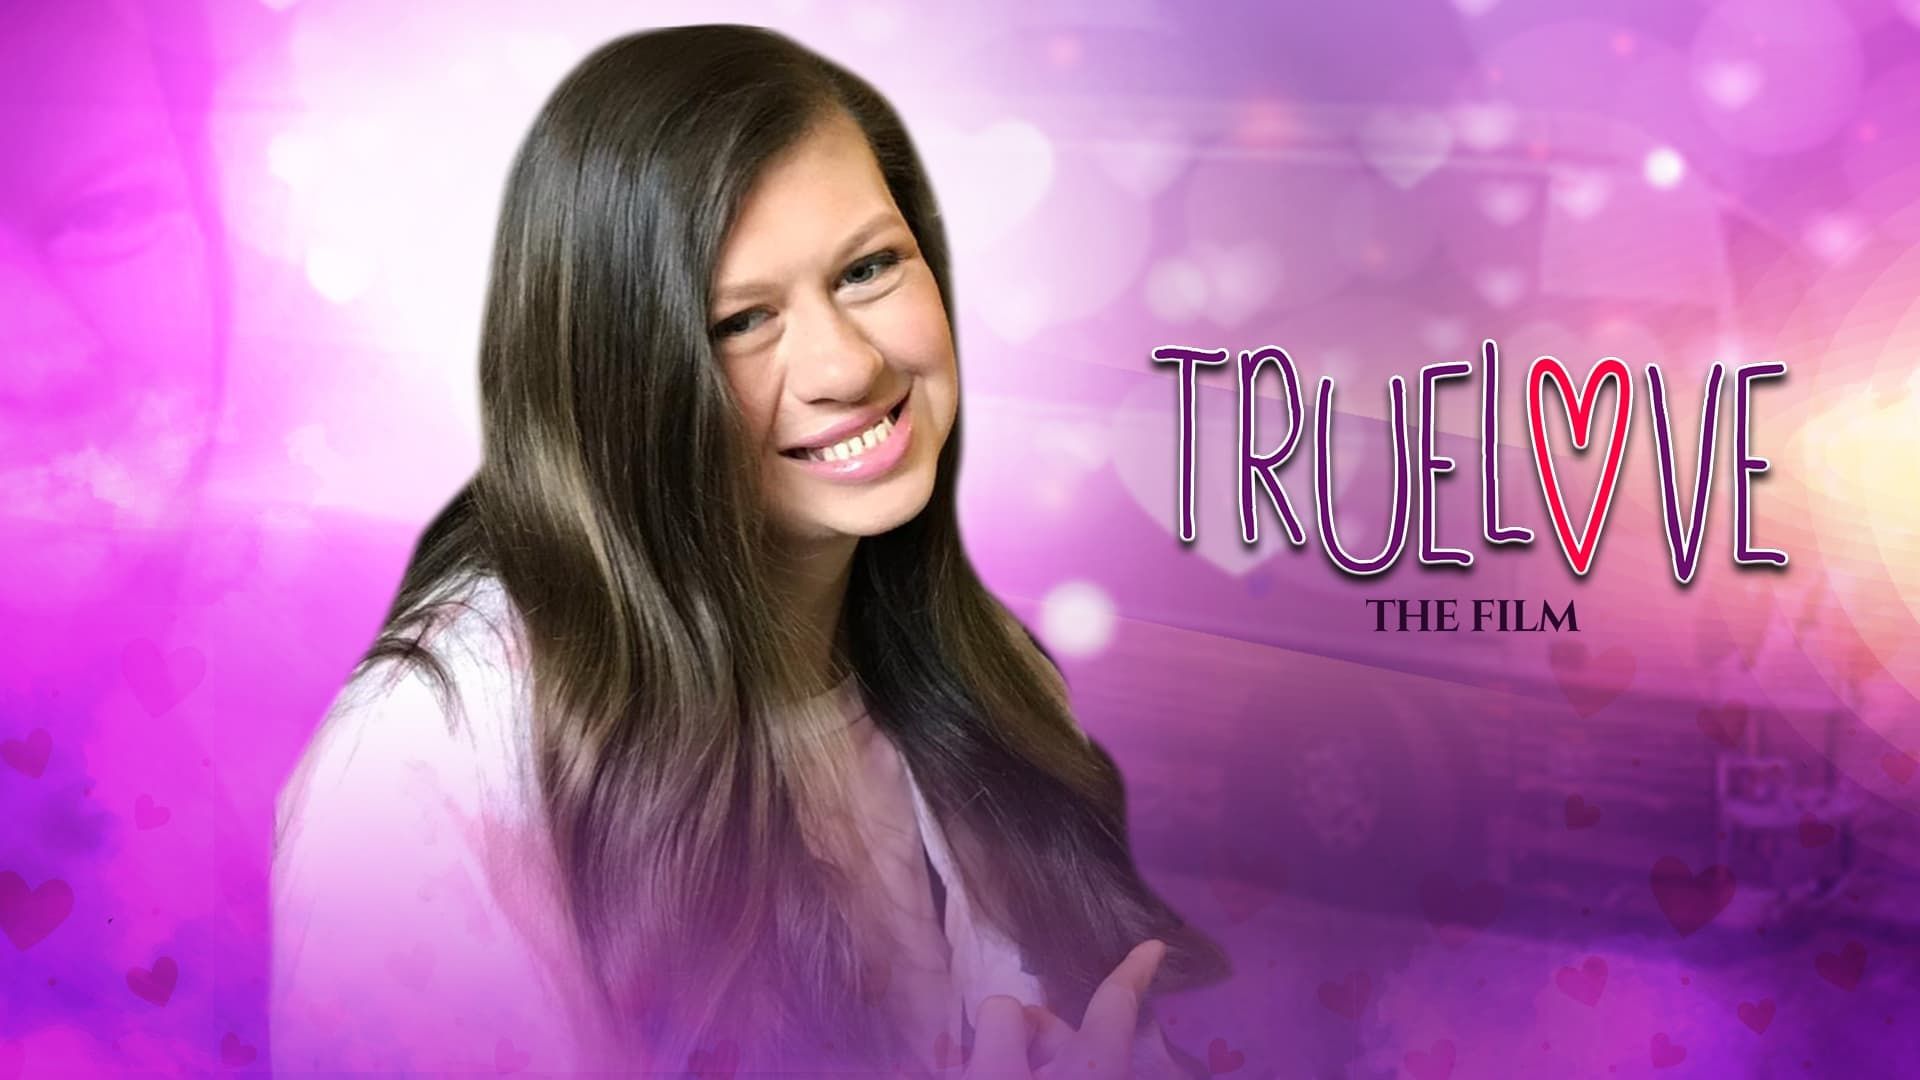 Truelove: The Film background